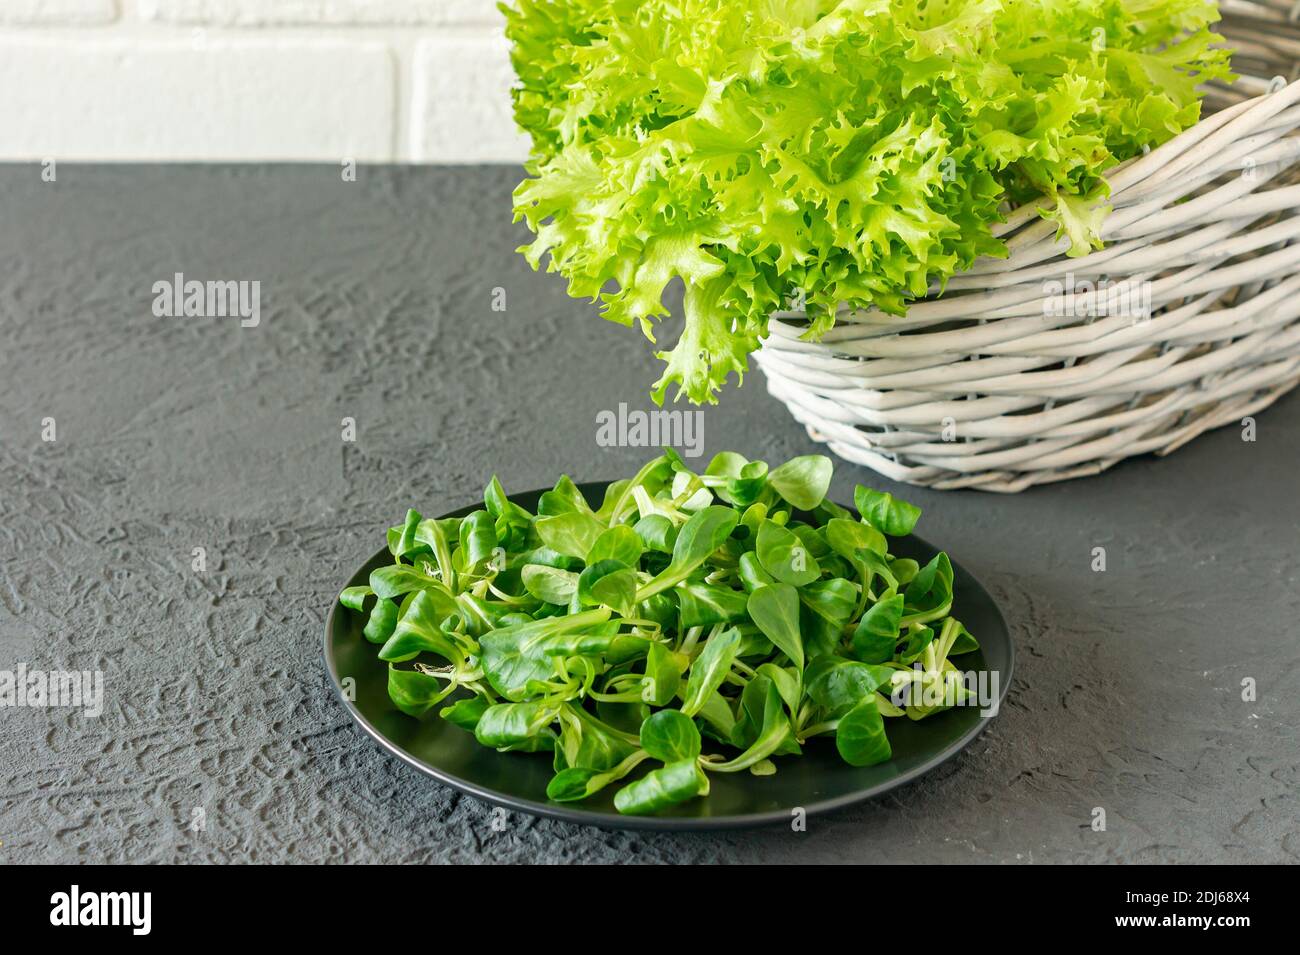 Valerianella locusta,corn salad,lamb's lettuce. Fresh green Corn salad leaves on a plate. Stock Photo